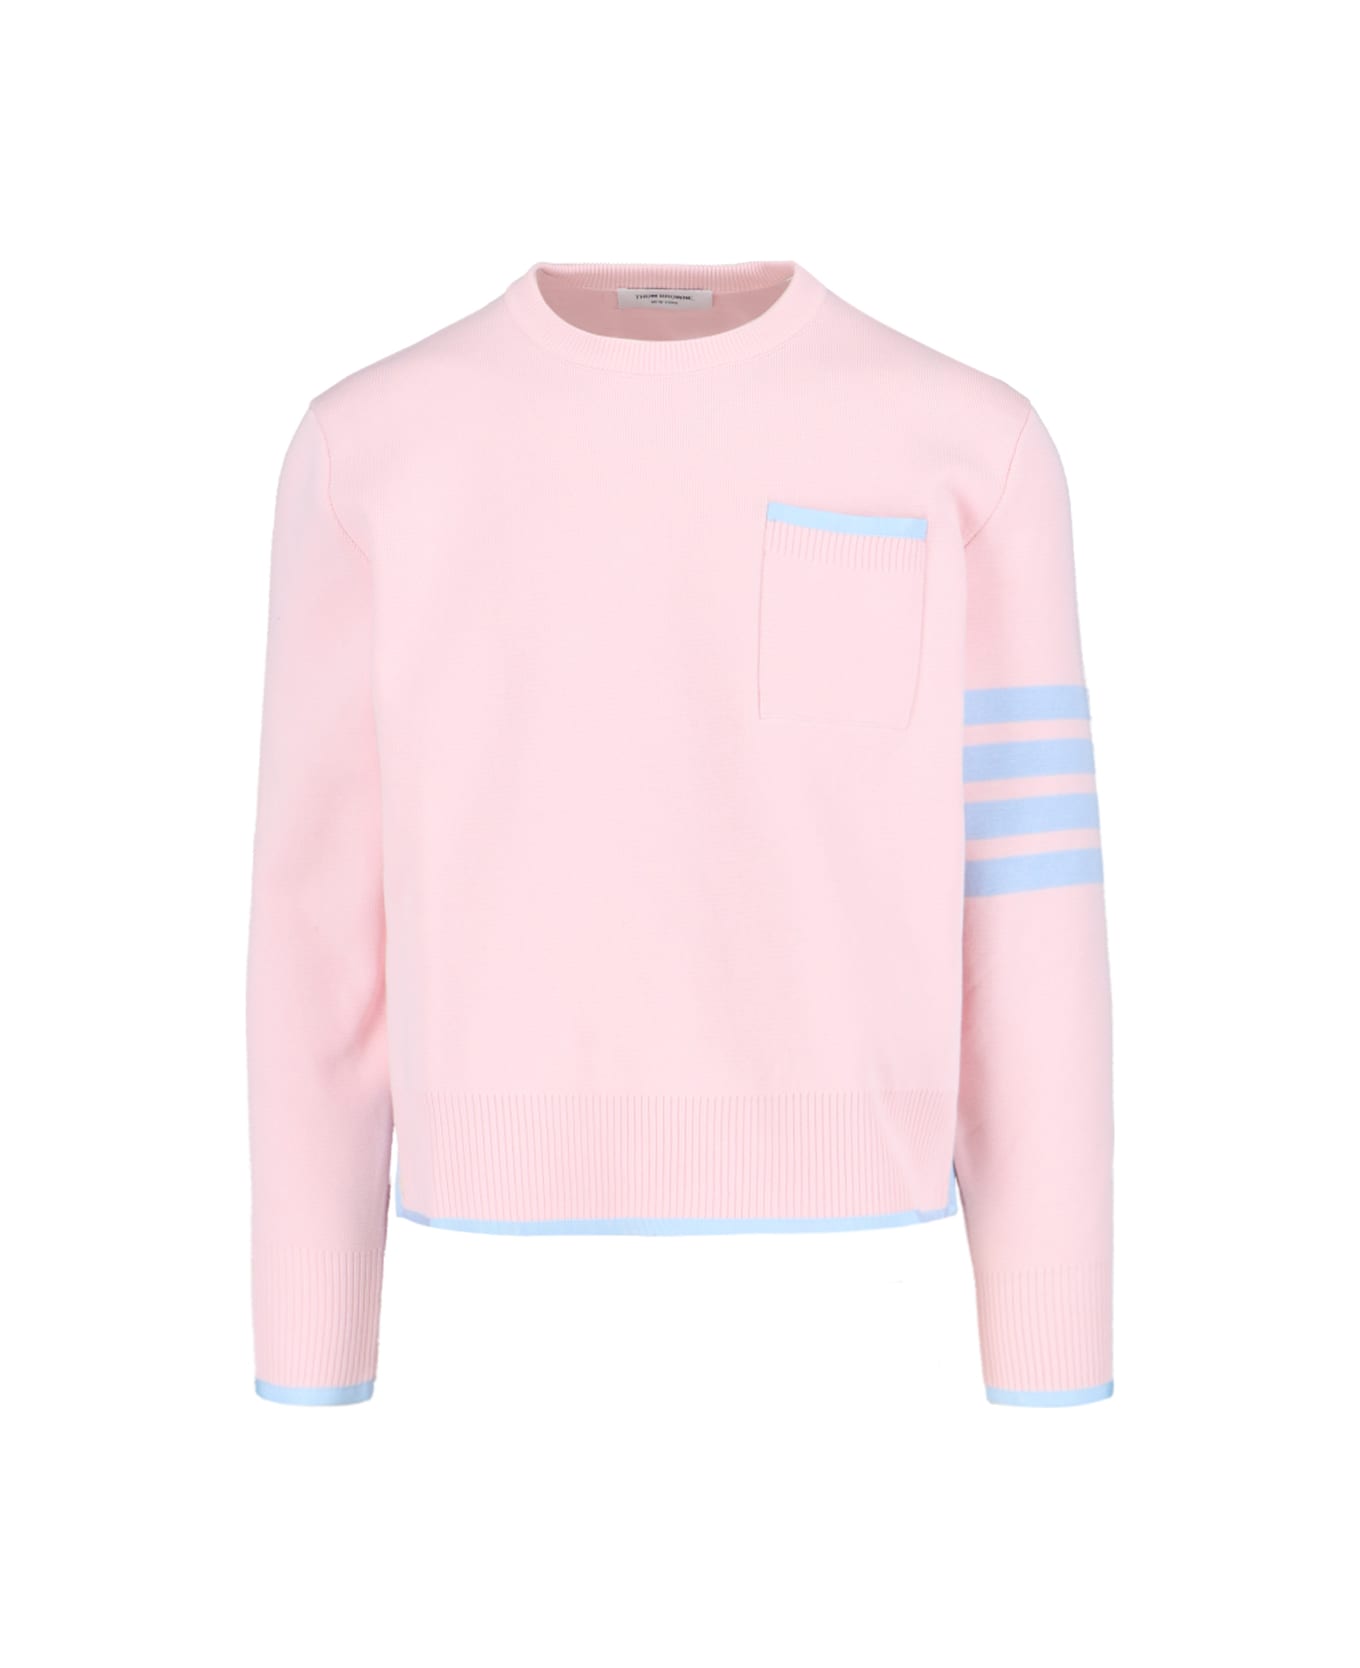 Thom Browne '4-bar' Sweater - Pink ニットウェア